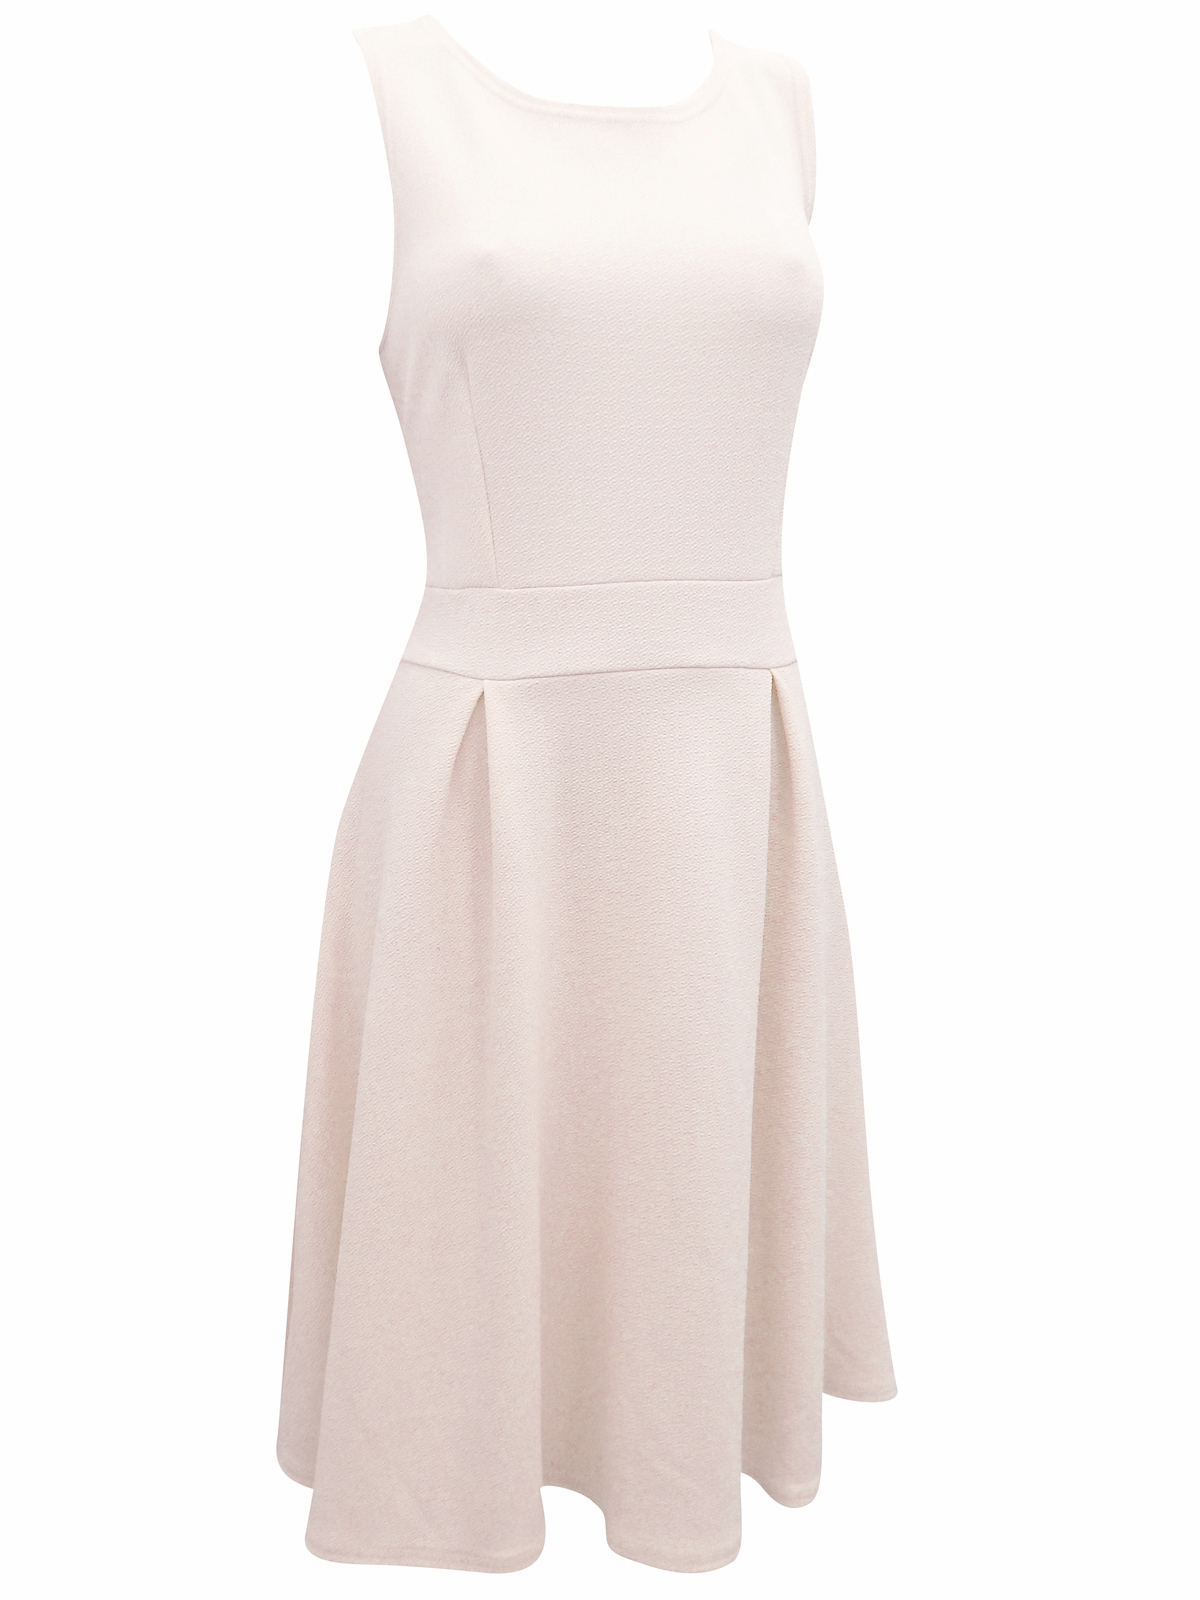 Marina Kaneva PALE-PINK Sleeveless Fit & Flare Pleated Dress - Size 10 ...